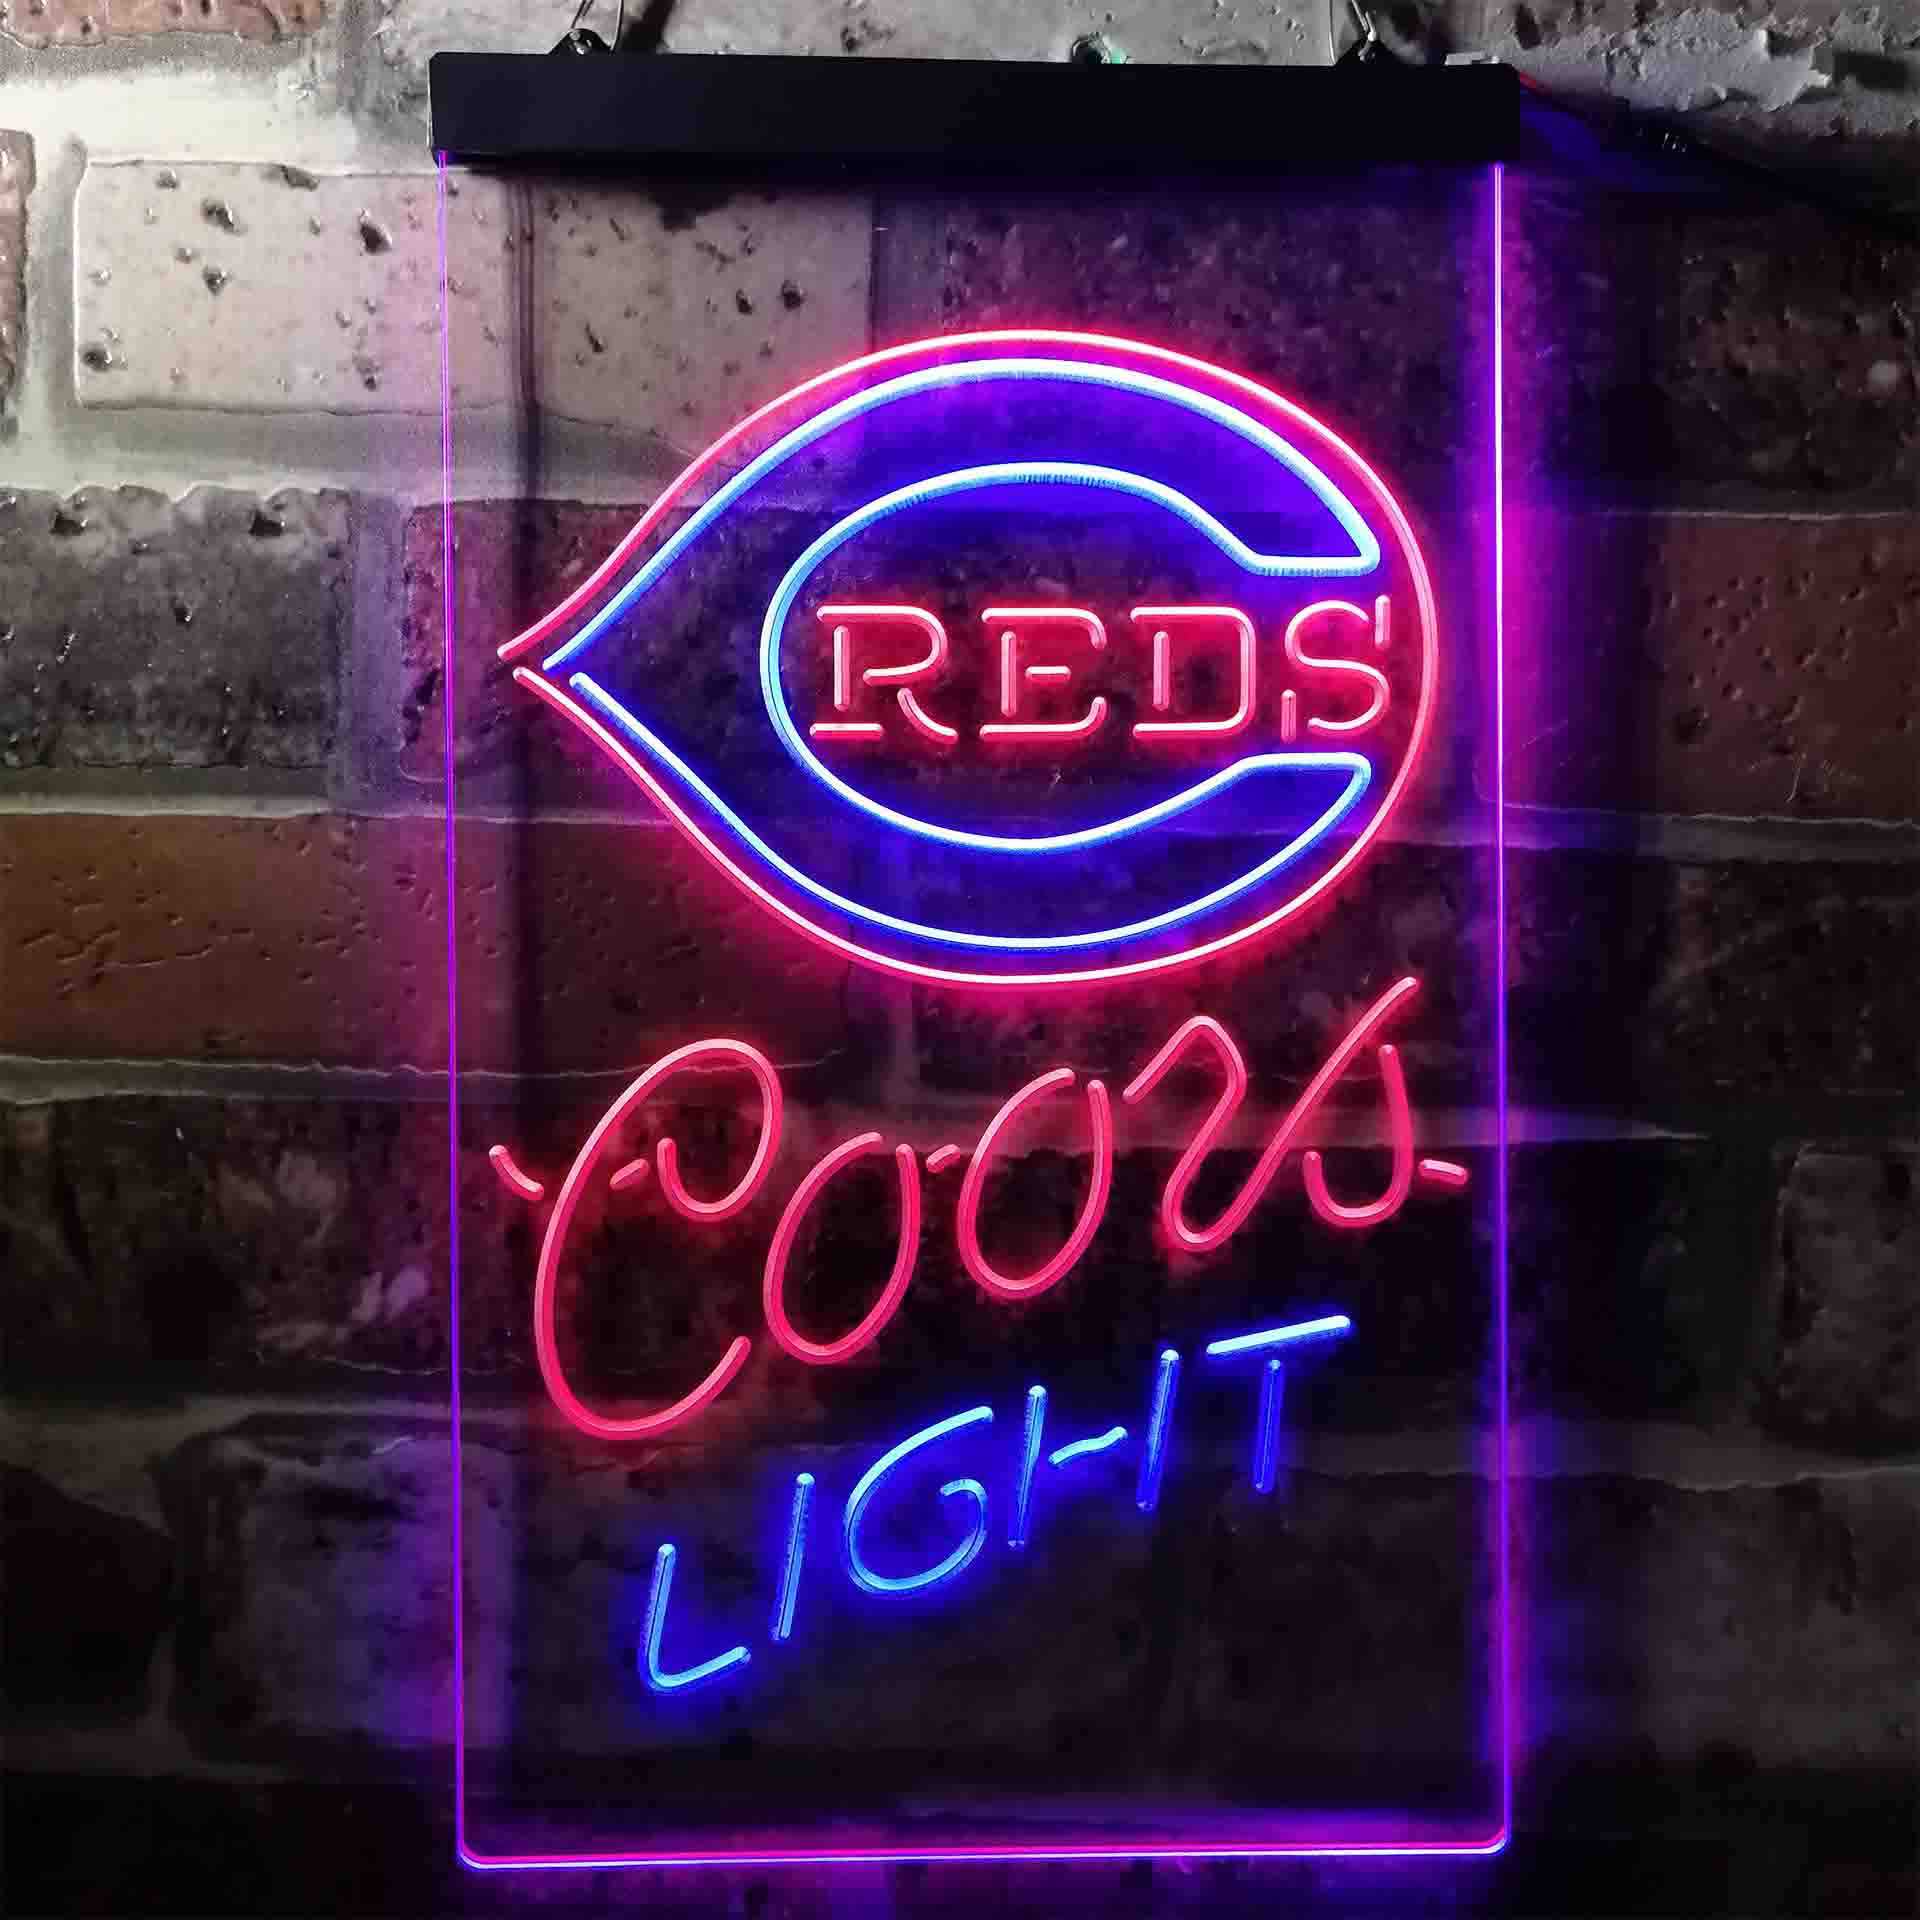 Cincinnati Reds Coors Light LED Neon Sign